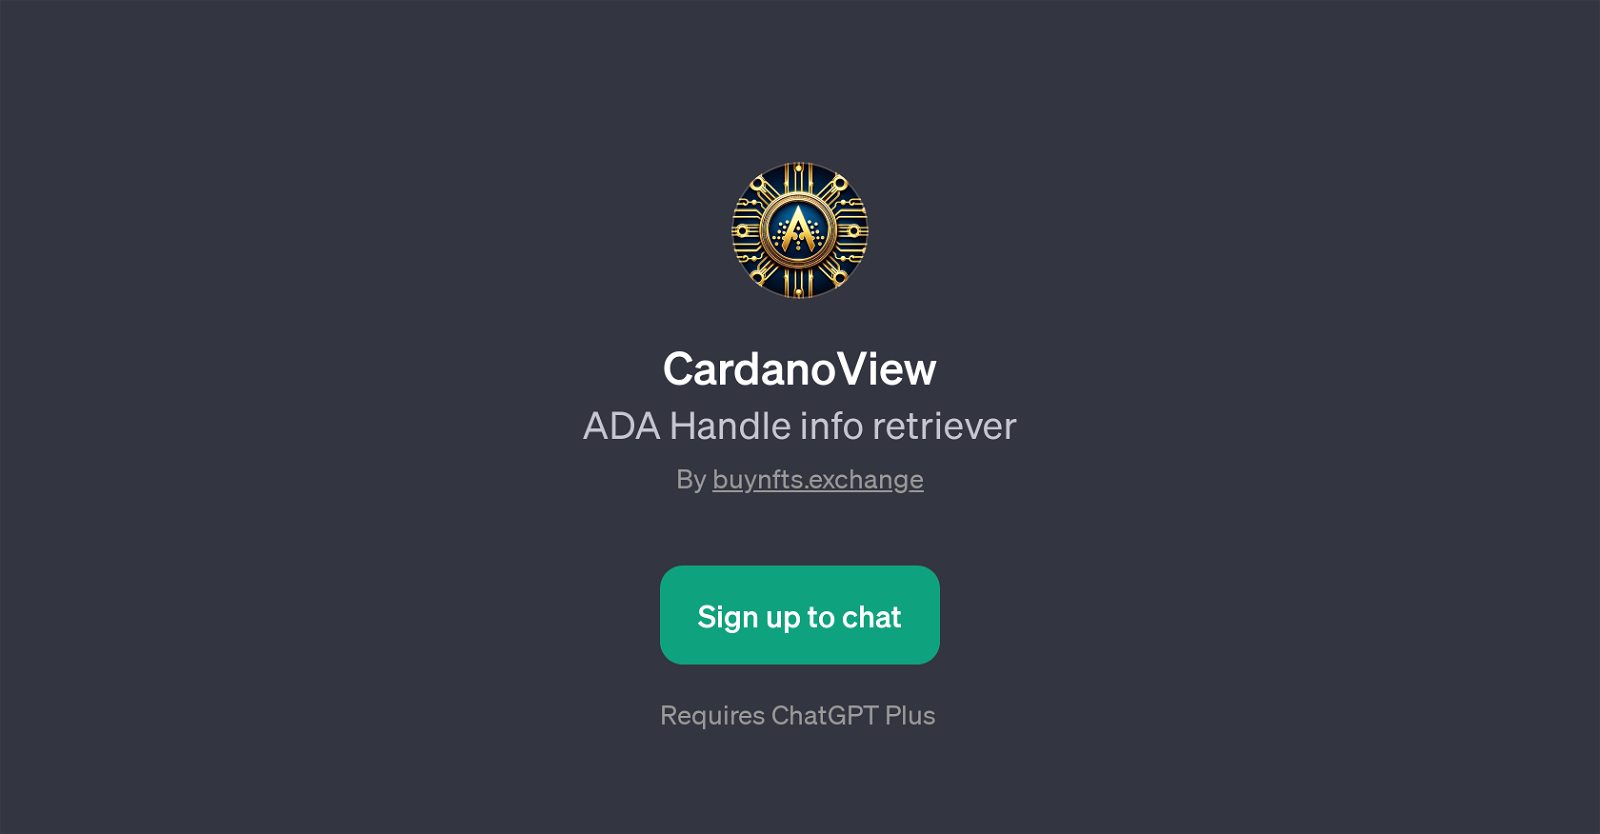 CardanoView website